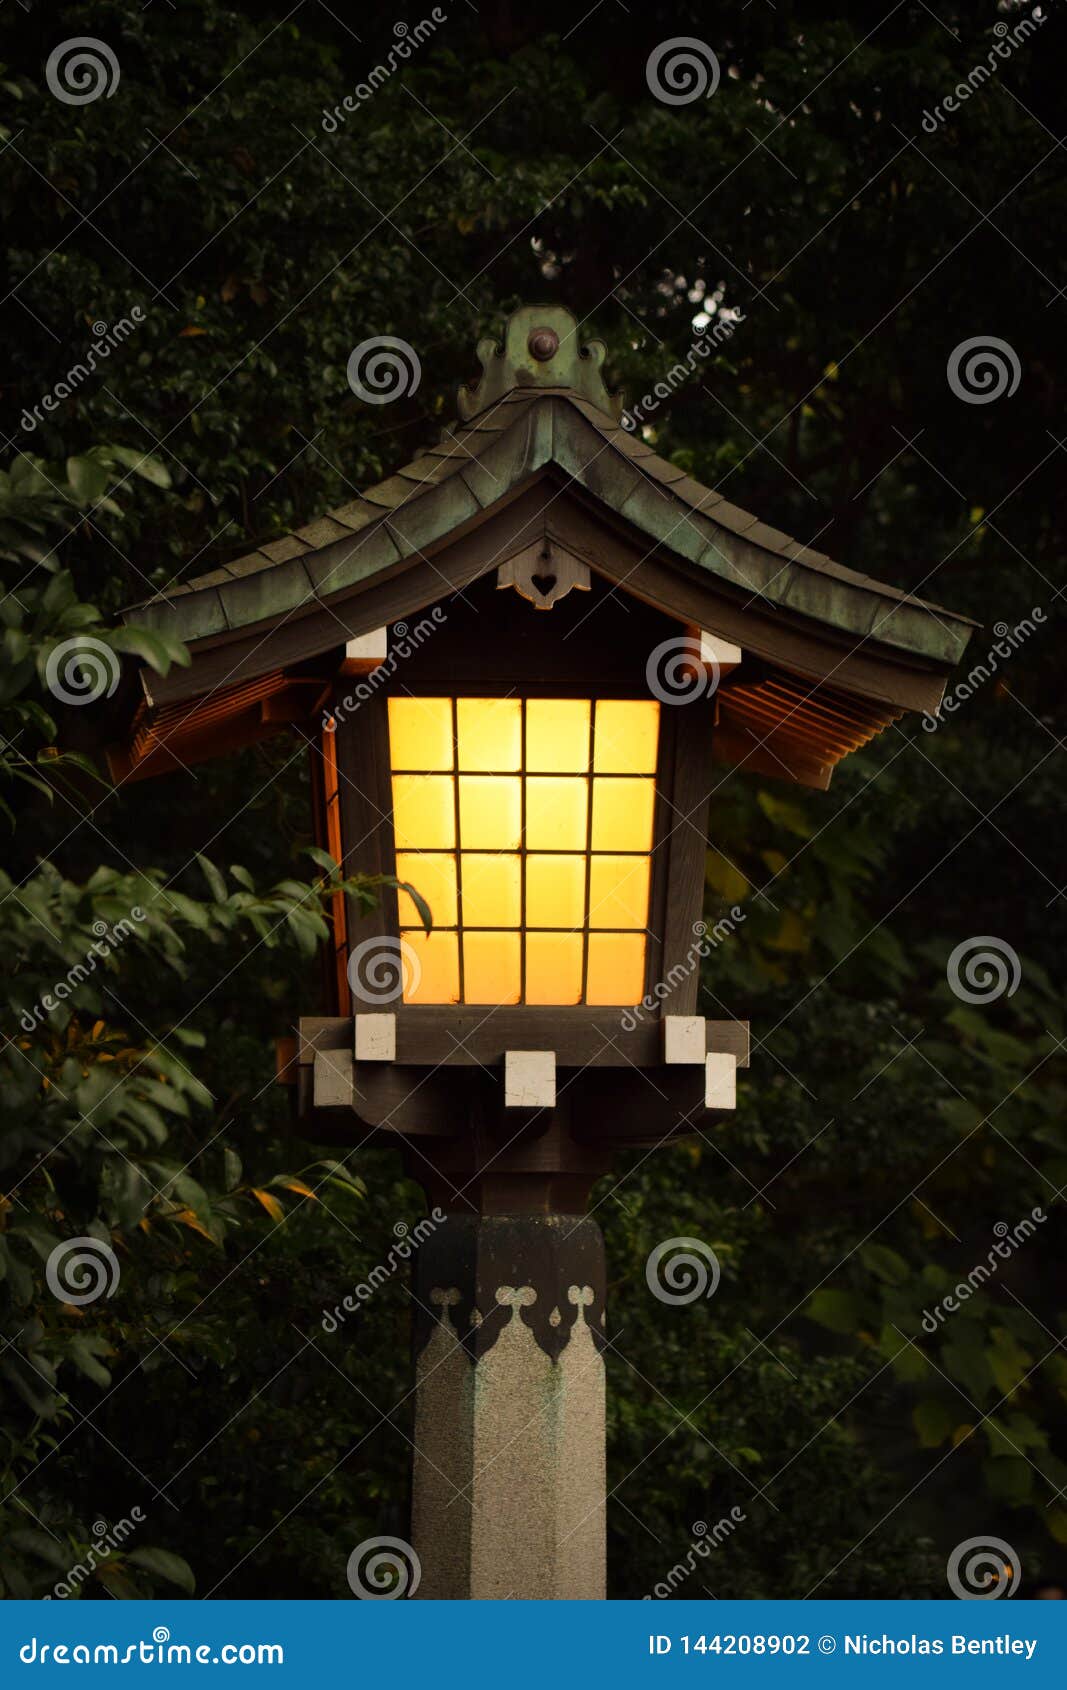 Warmth of the lantern stock photo. Image of lantern - 144208902